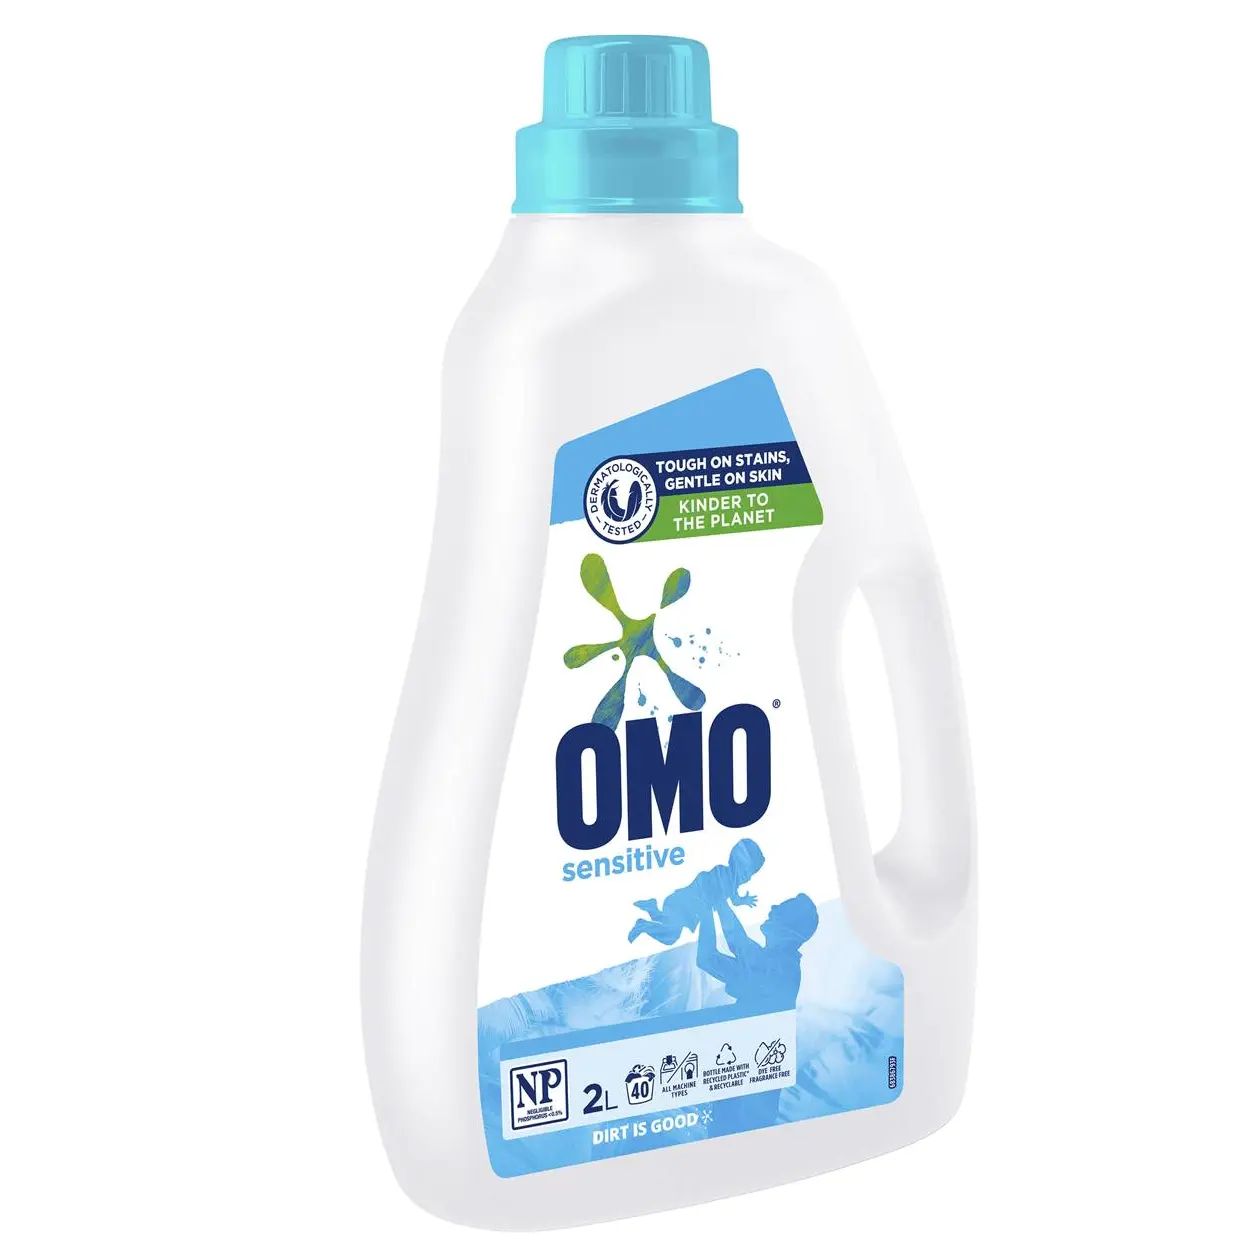 Harga diskon besar cairan deterjen Laundry sensitif Omo untuk dijual